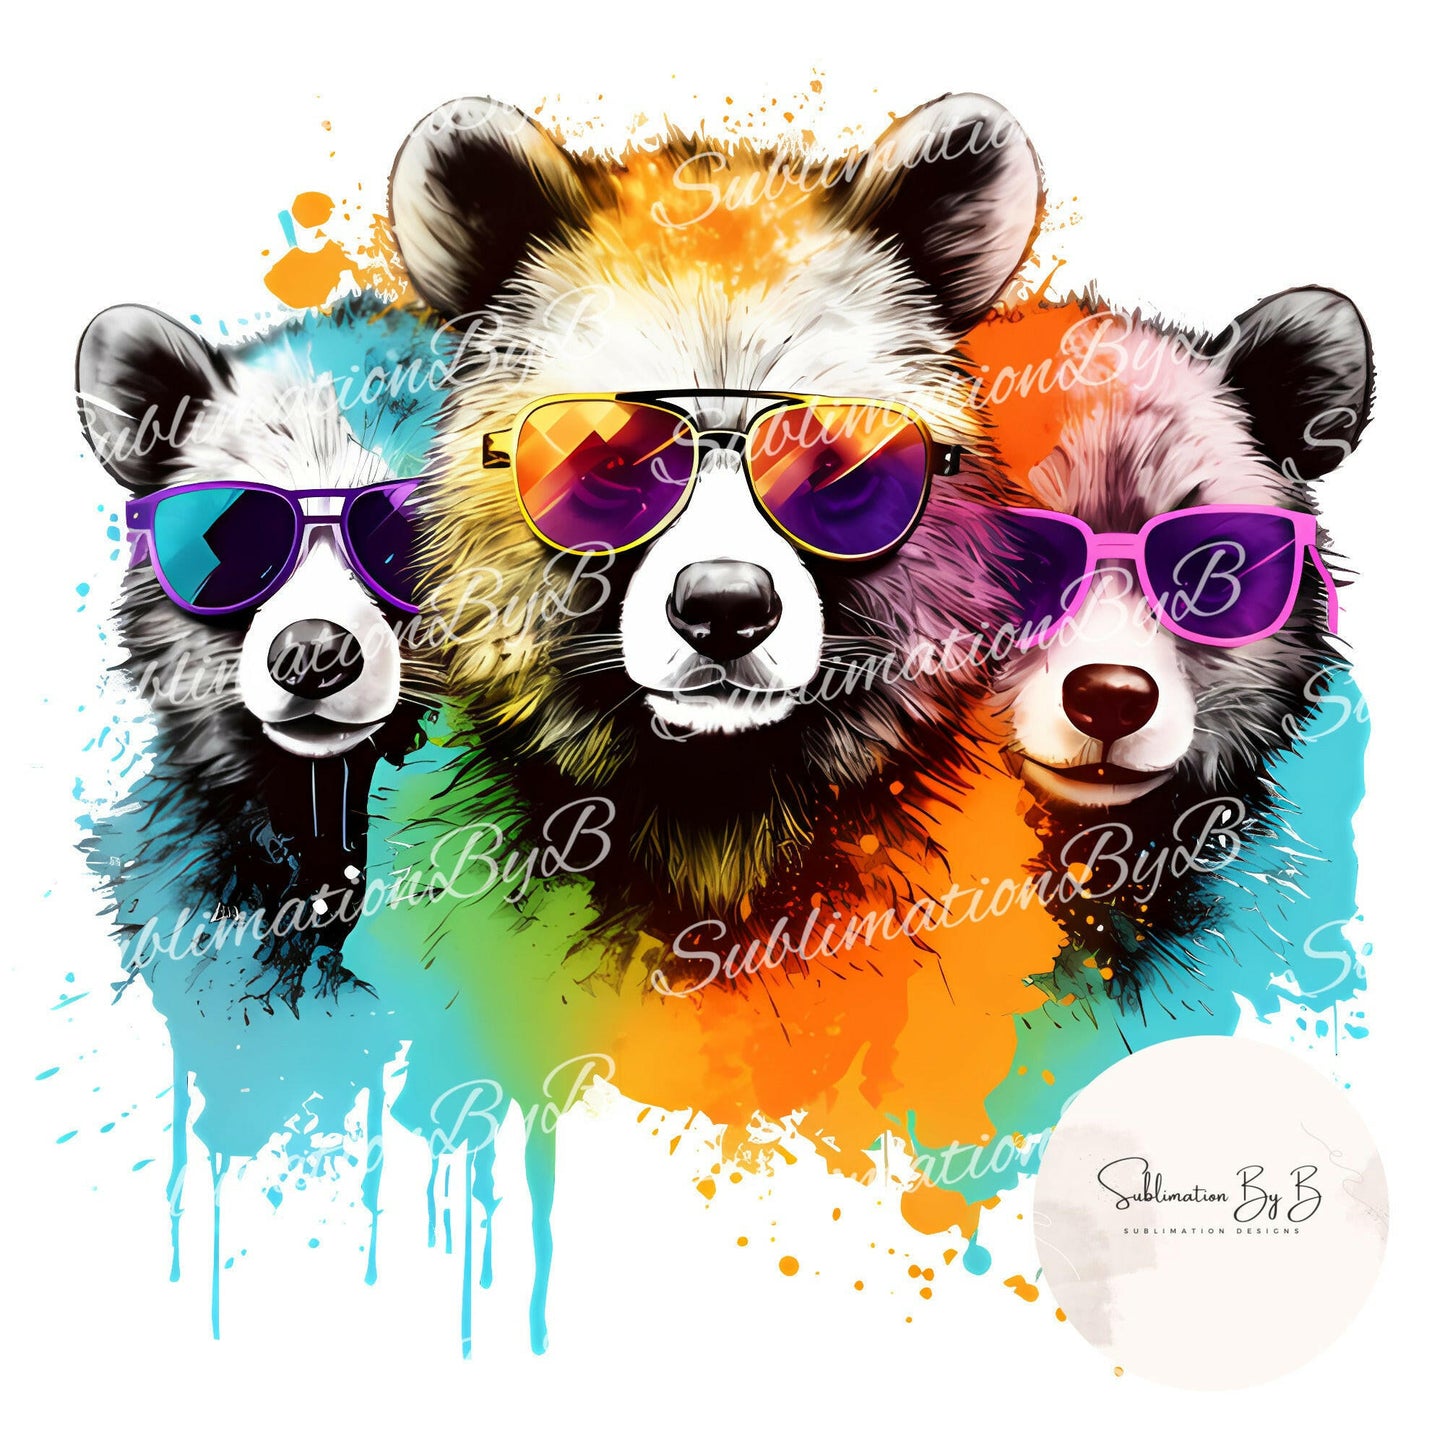 Vibrant Color Bear Trio: Unique Sublimation Design for an Eye-Catching Statement!